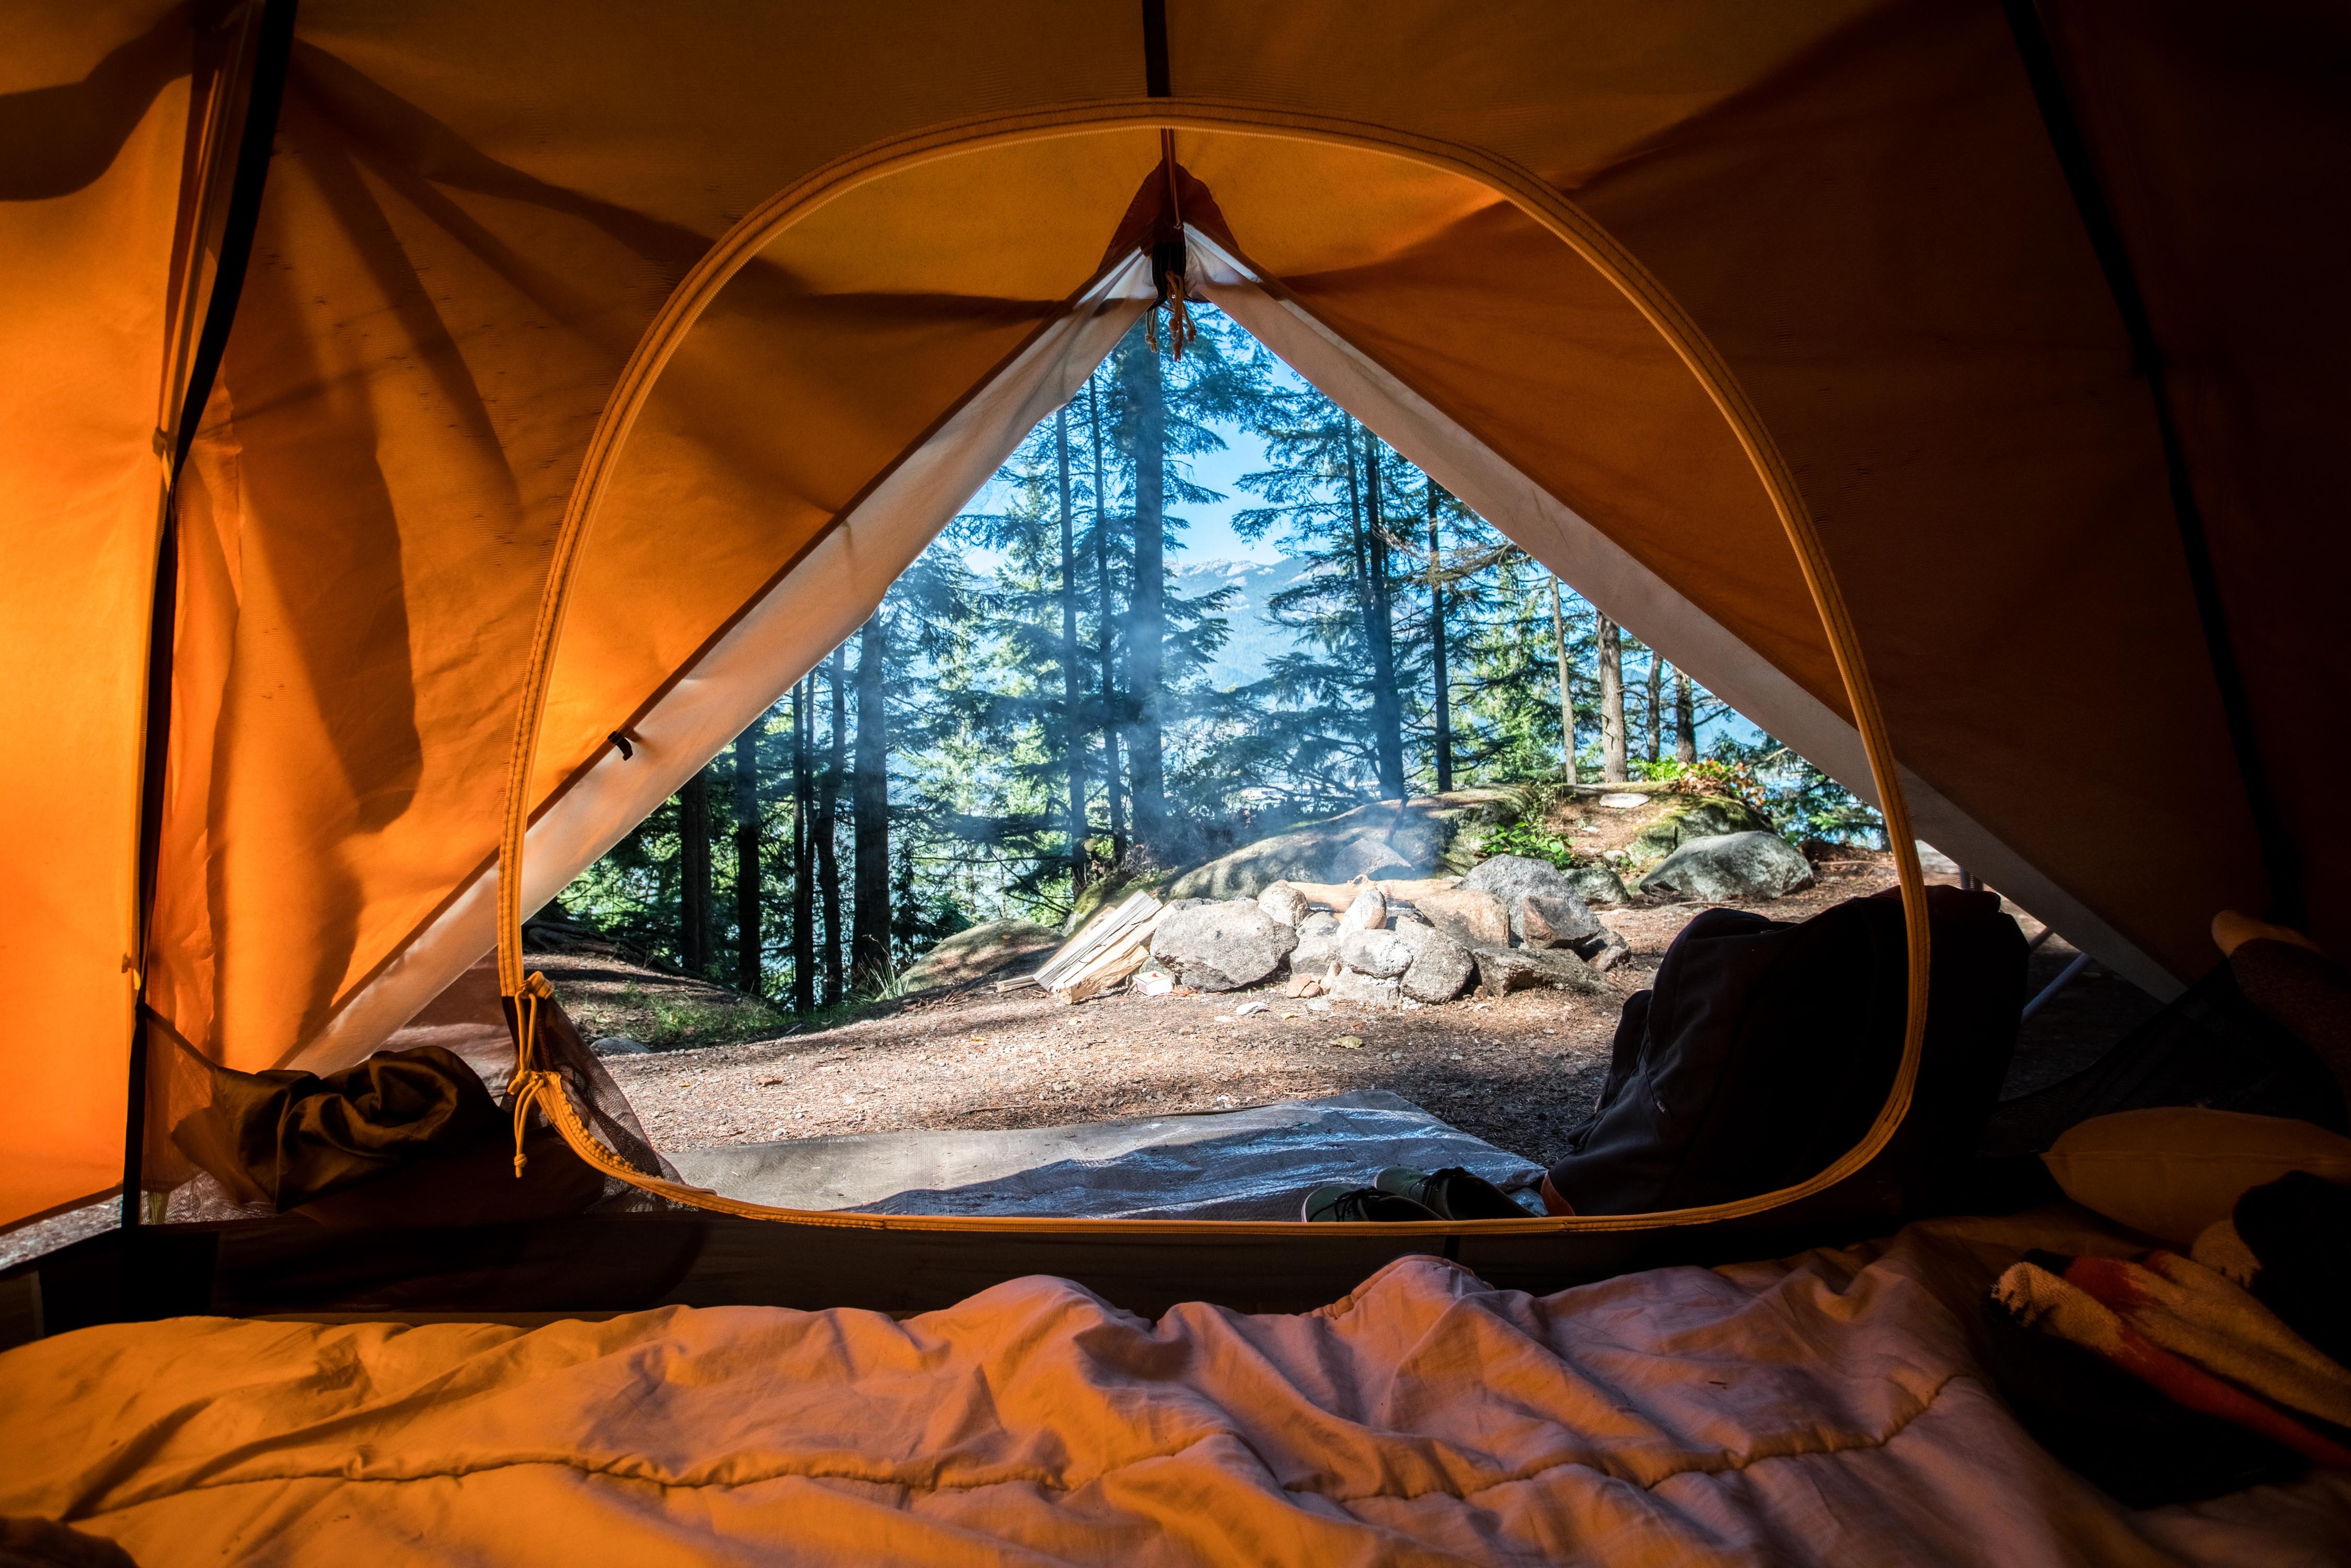 camping, nature, campsite, miscellanea, miscellaneous, journey, tent, tourism